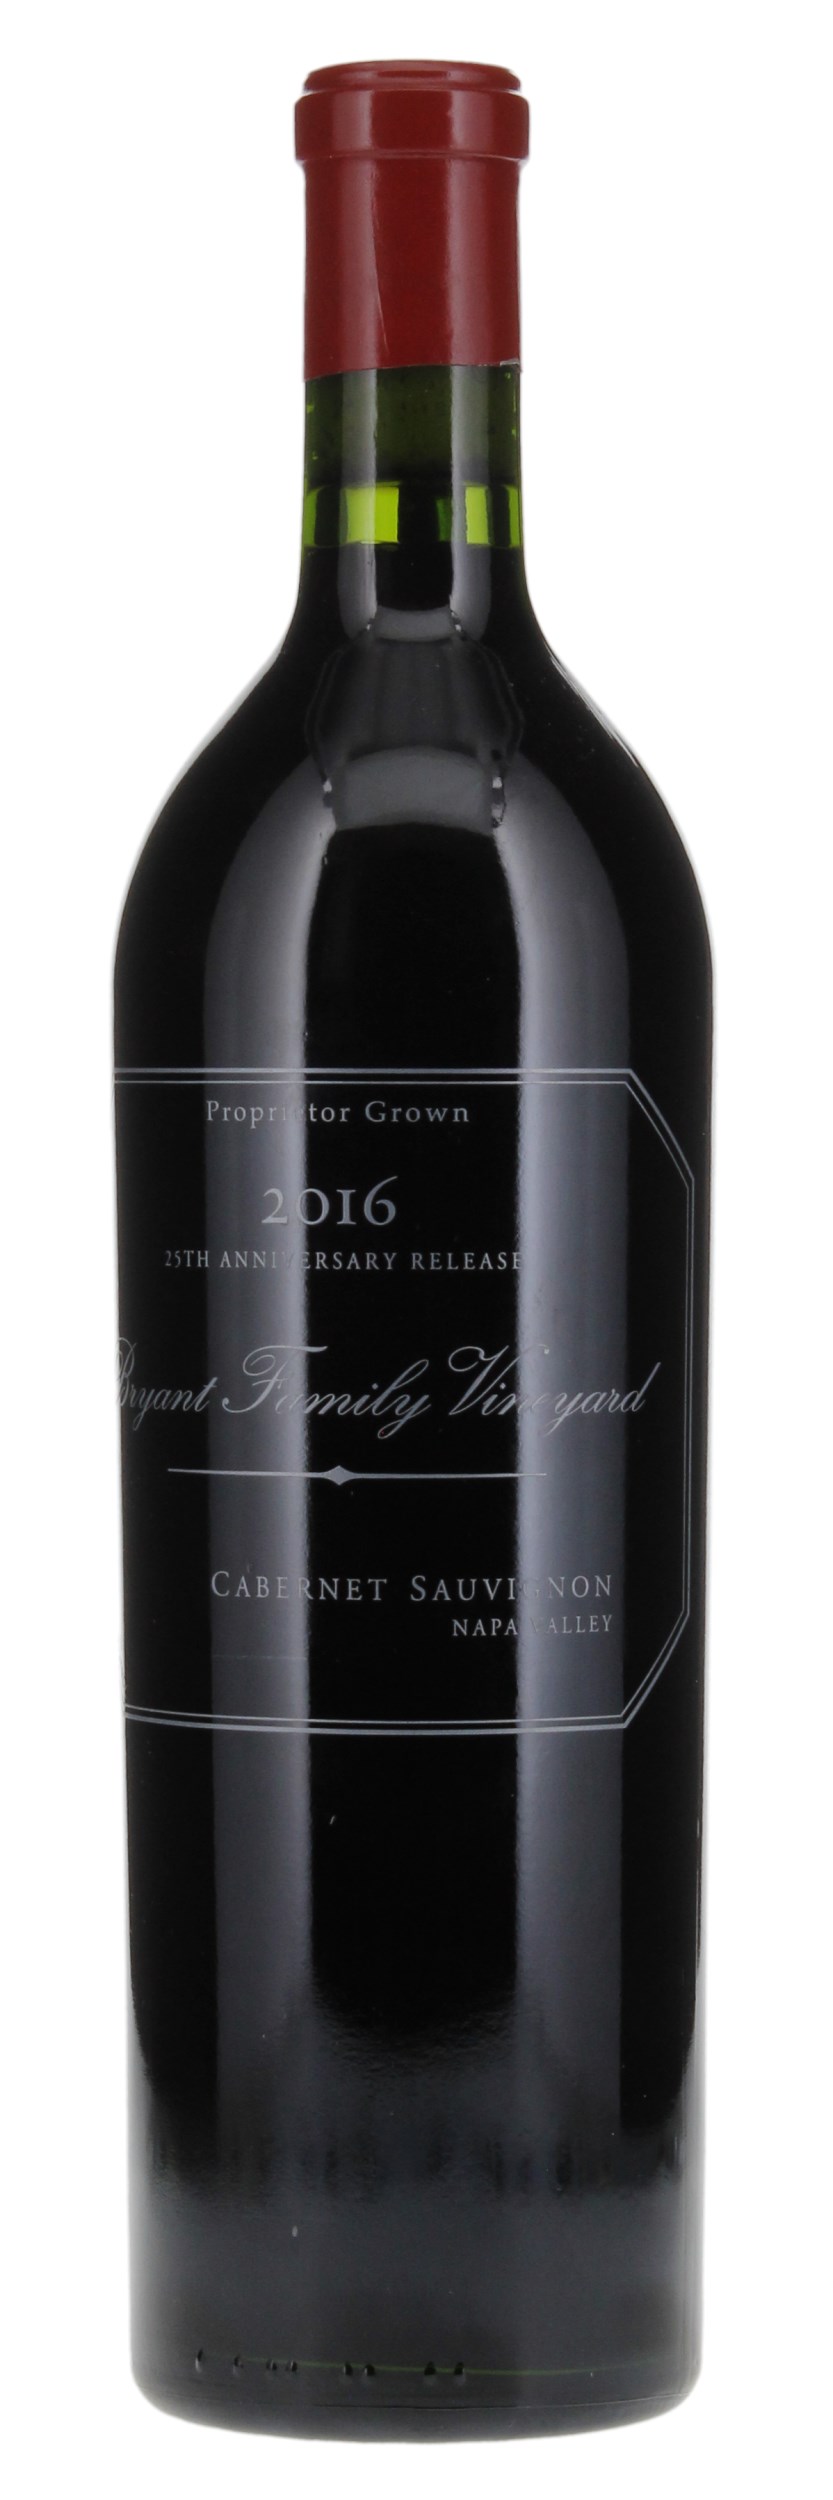 2016 Bryant Family Vineyard Cabernet Sauvignon, 750ml